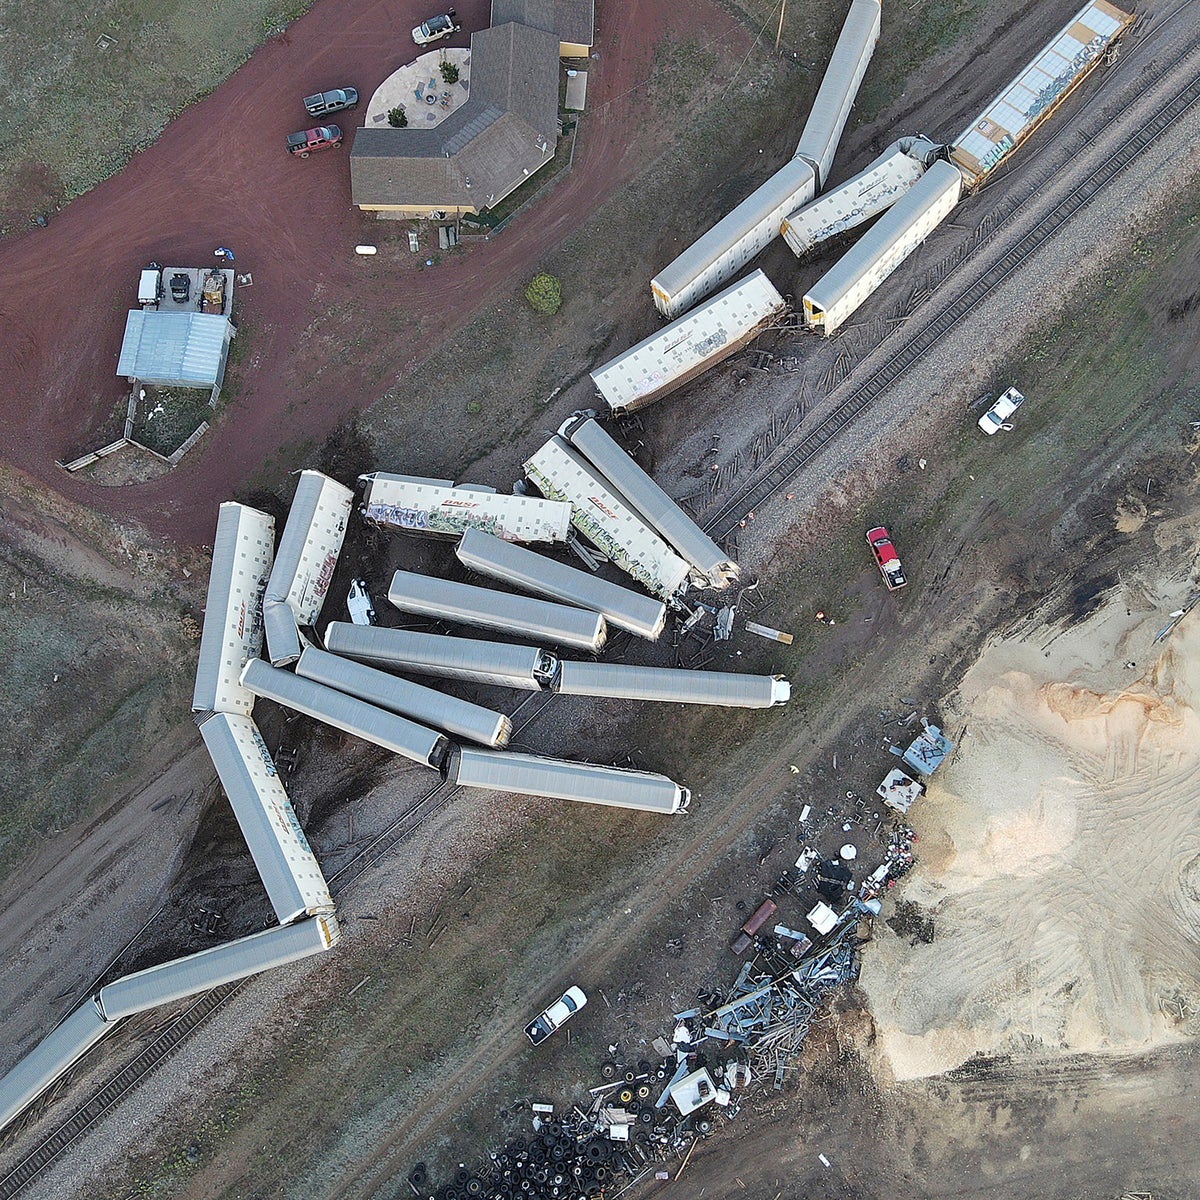 Drone video captures destruction in Arizona train derailment